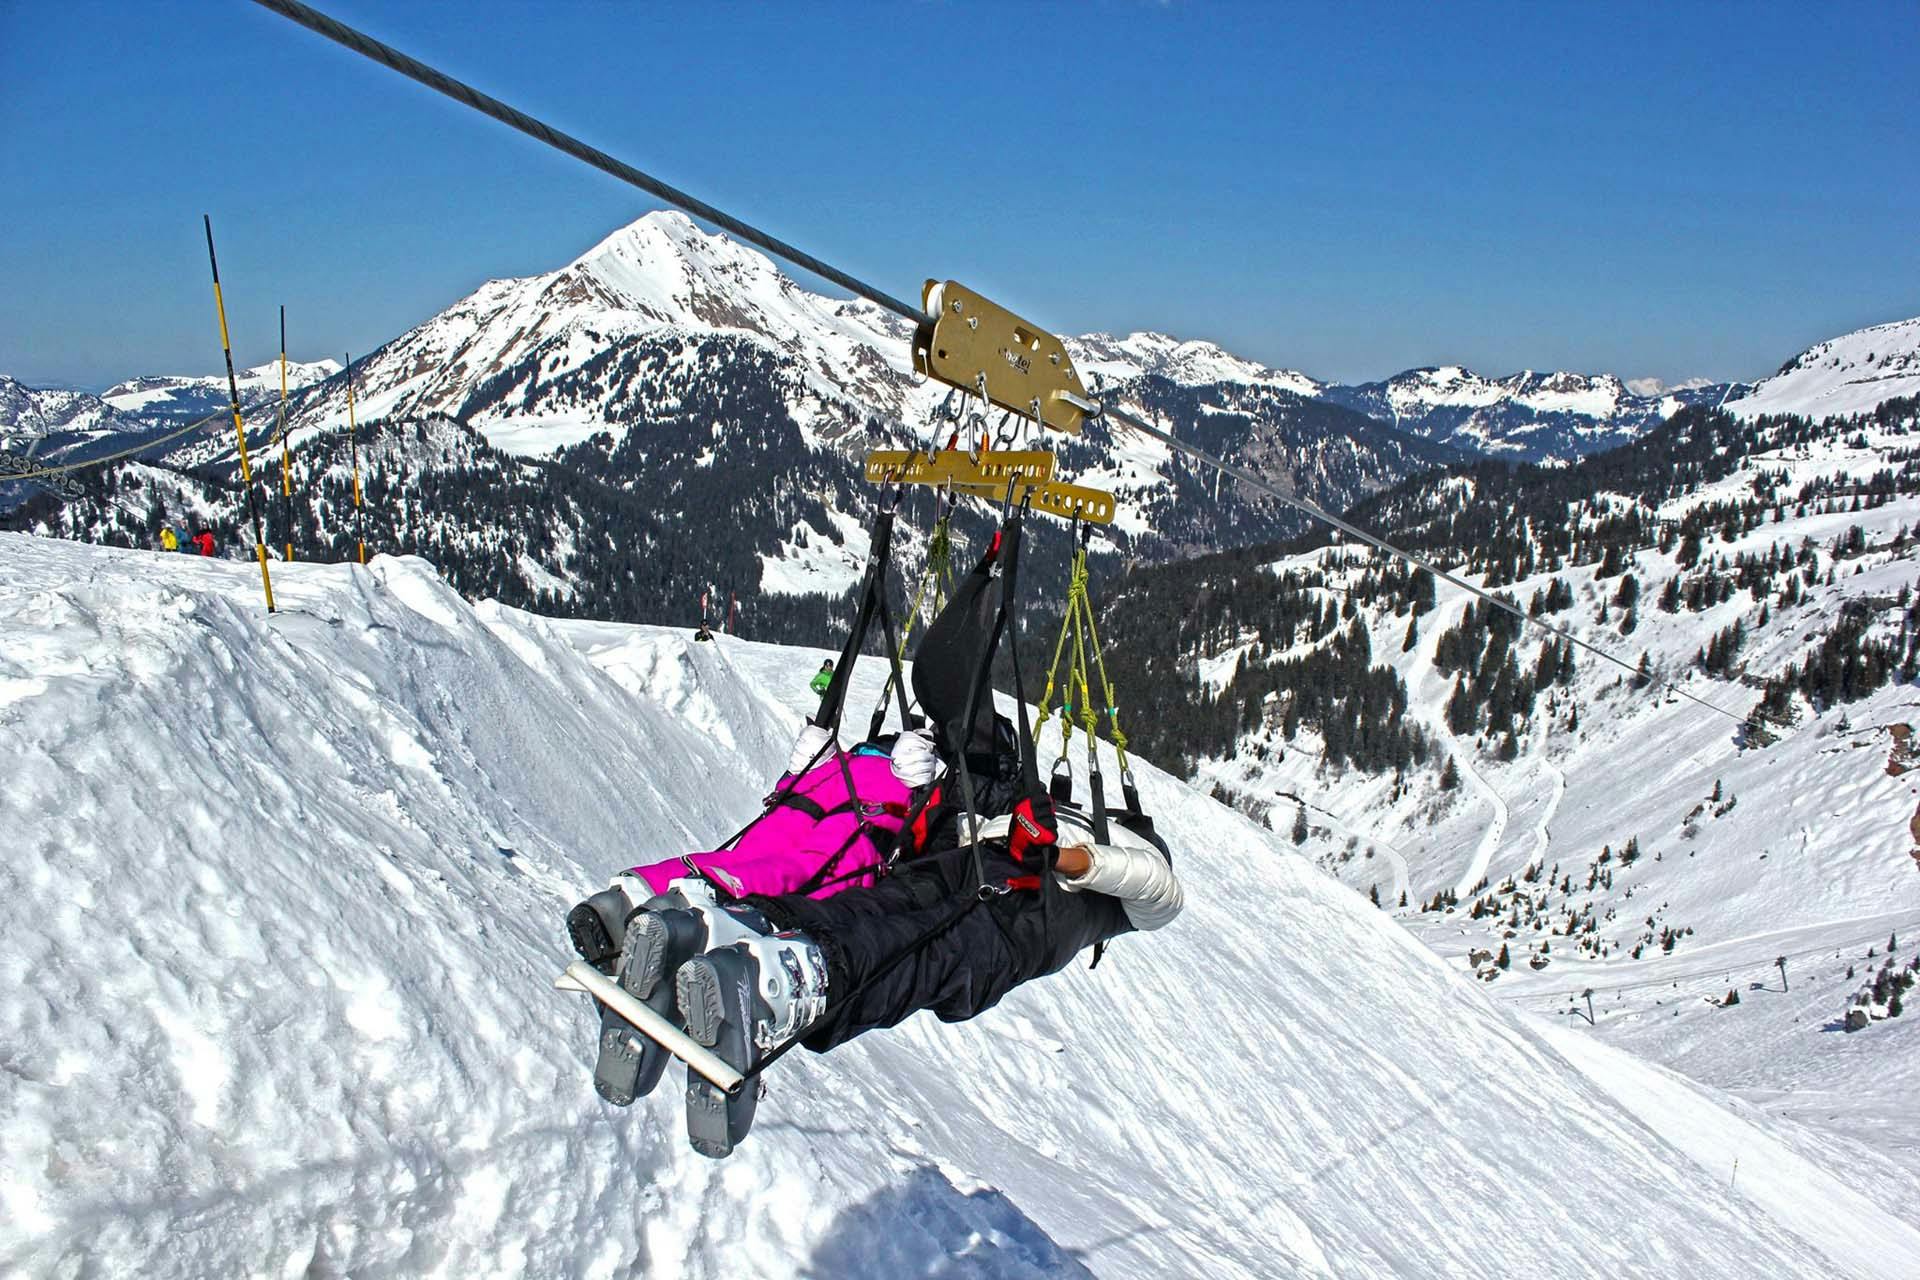 Couple enjoying zipline activity in winter ski resort Chatel